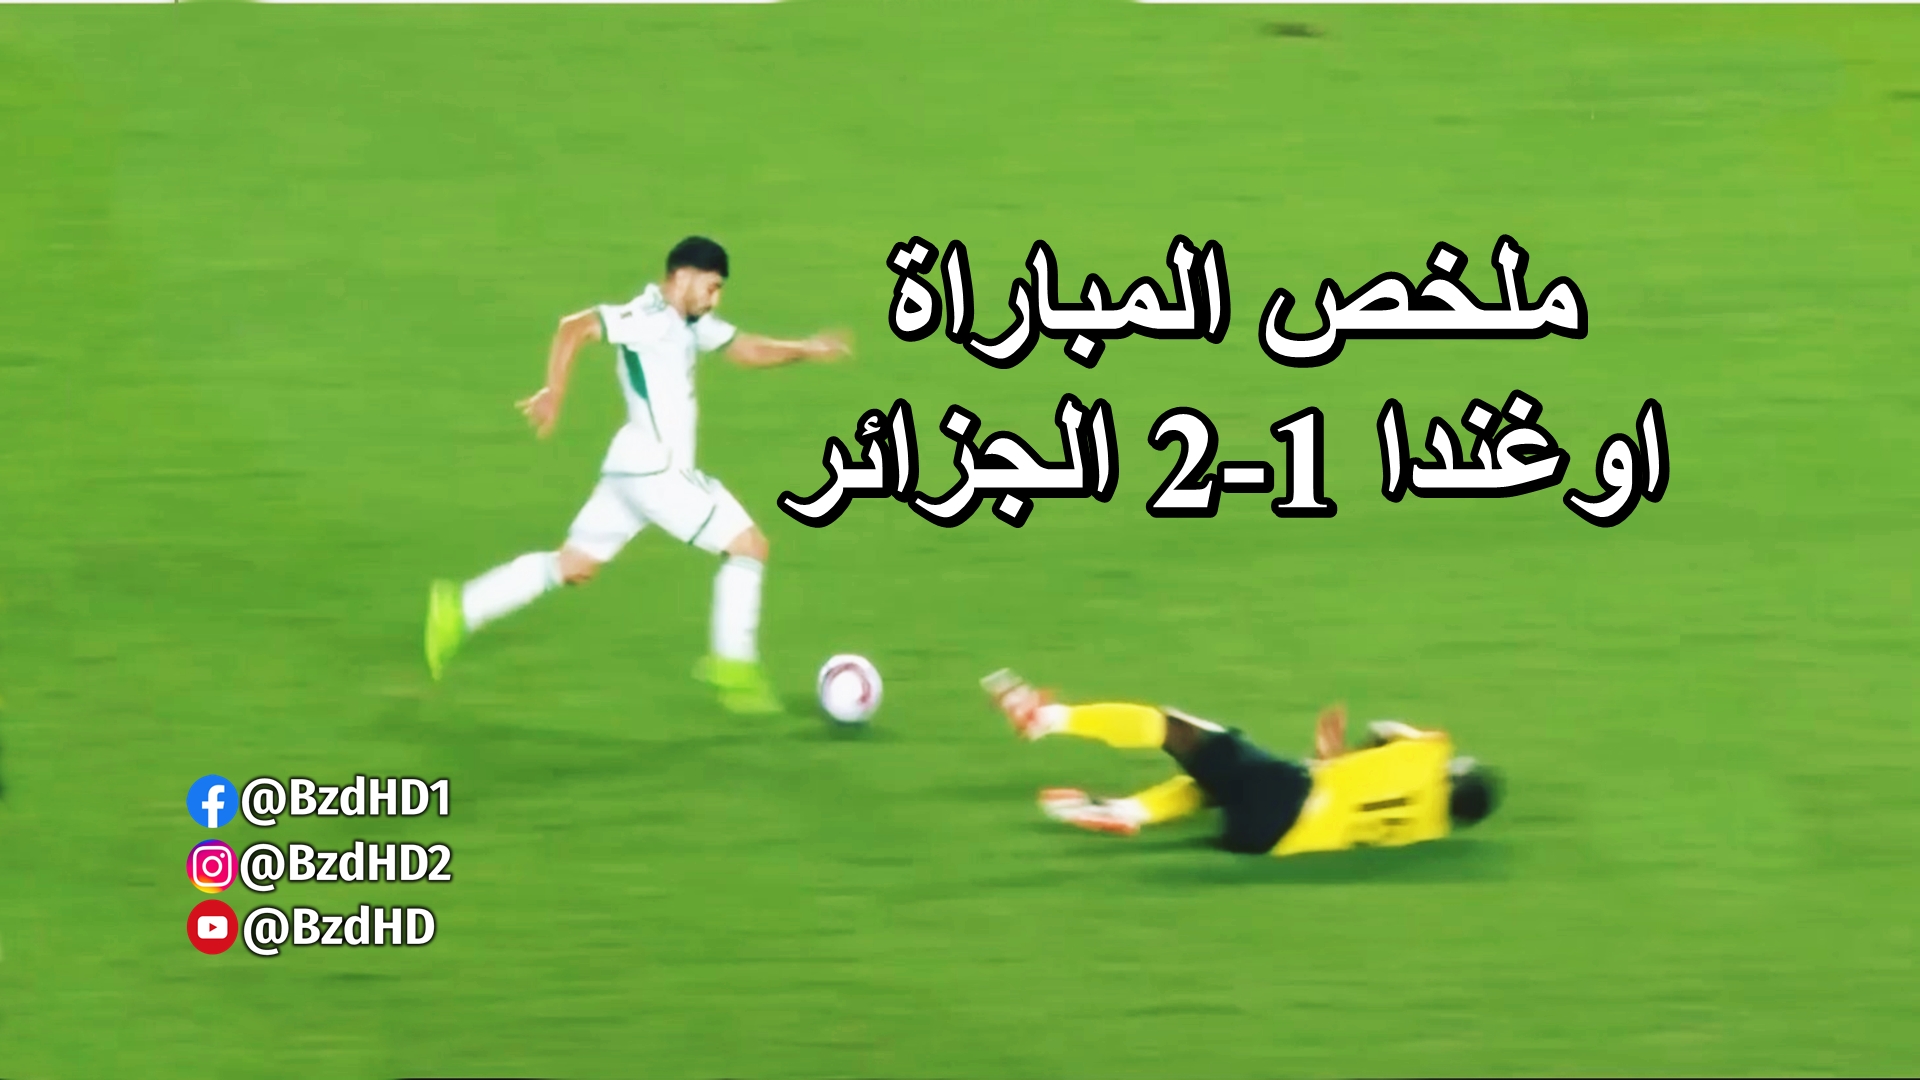 شاهد ملخص مبارة الجزائر واوغندا 2-1 - اهداف مباراة الجزائر 9